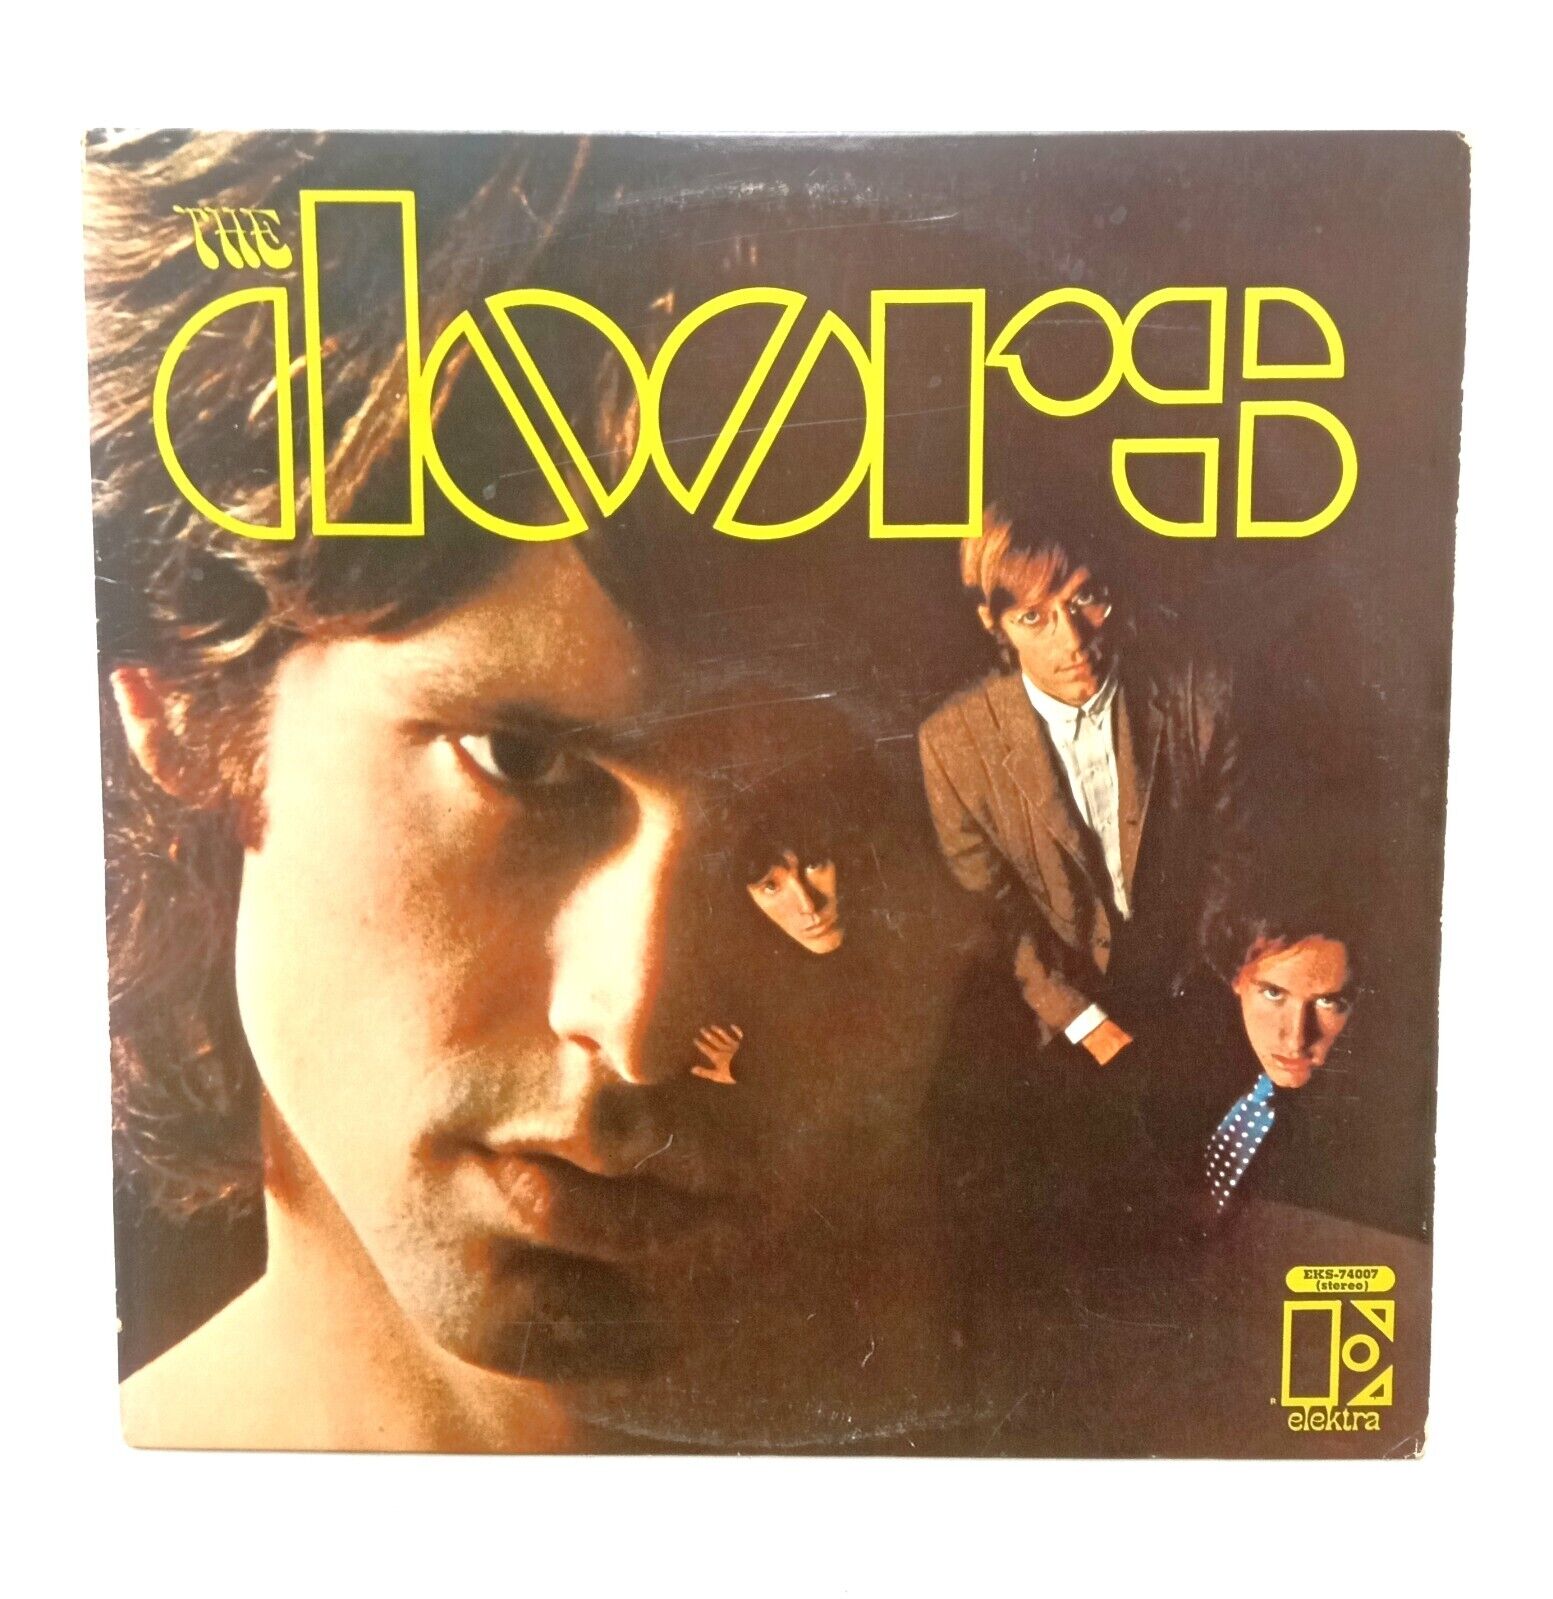 The Doors - Self-Titled Debut Album - Vinyl -- 1967 Pressing EKS74007-A-B